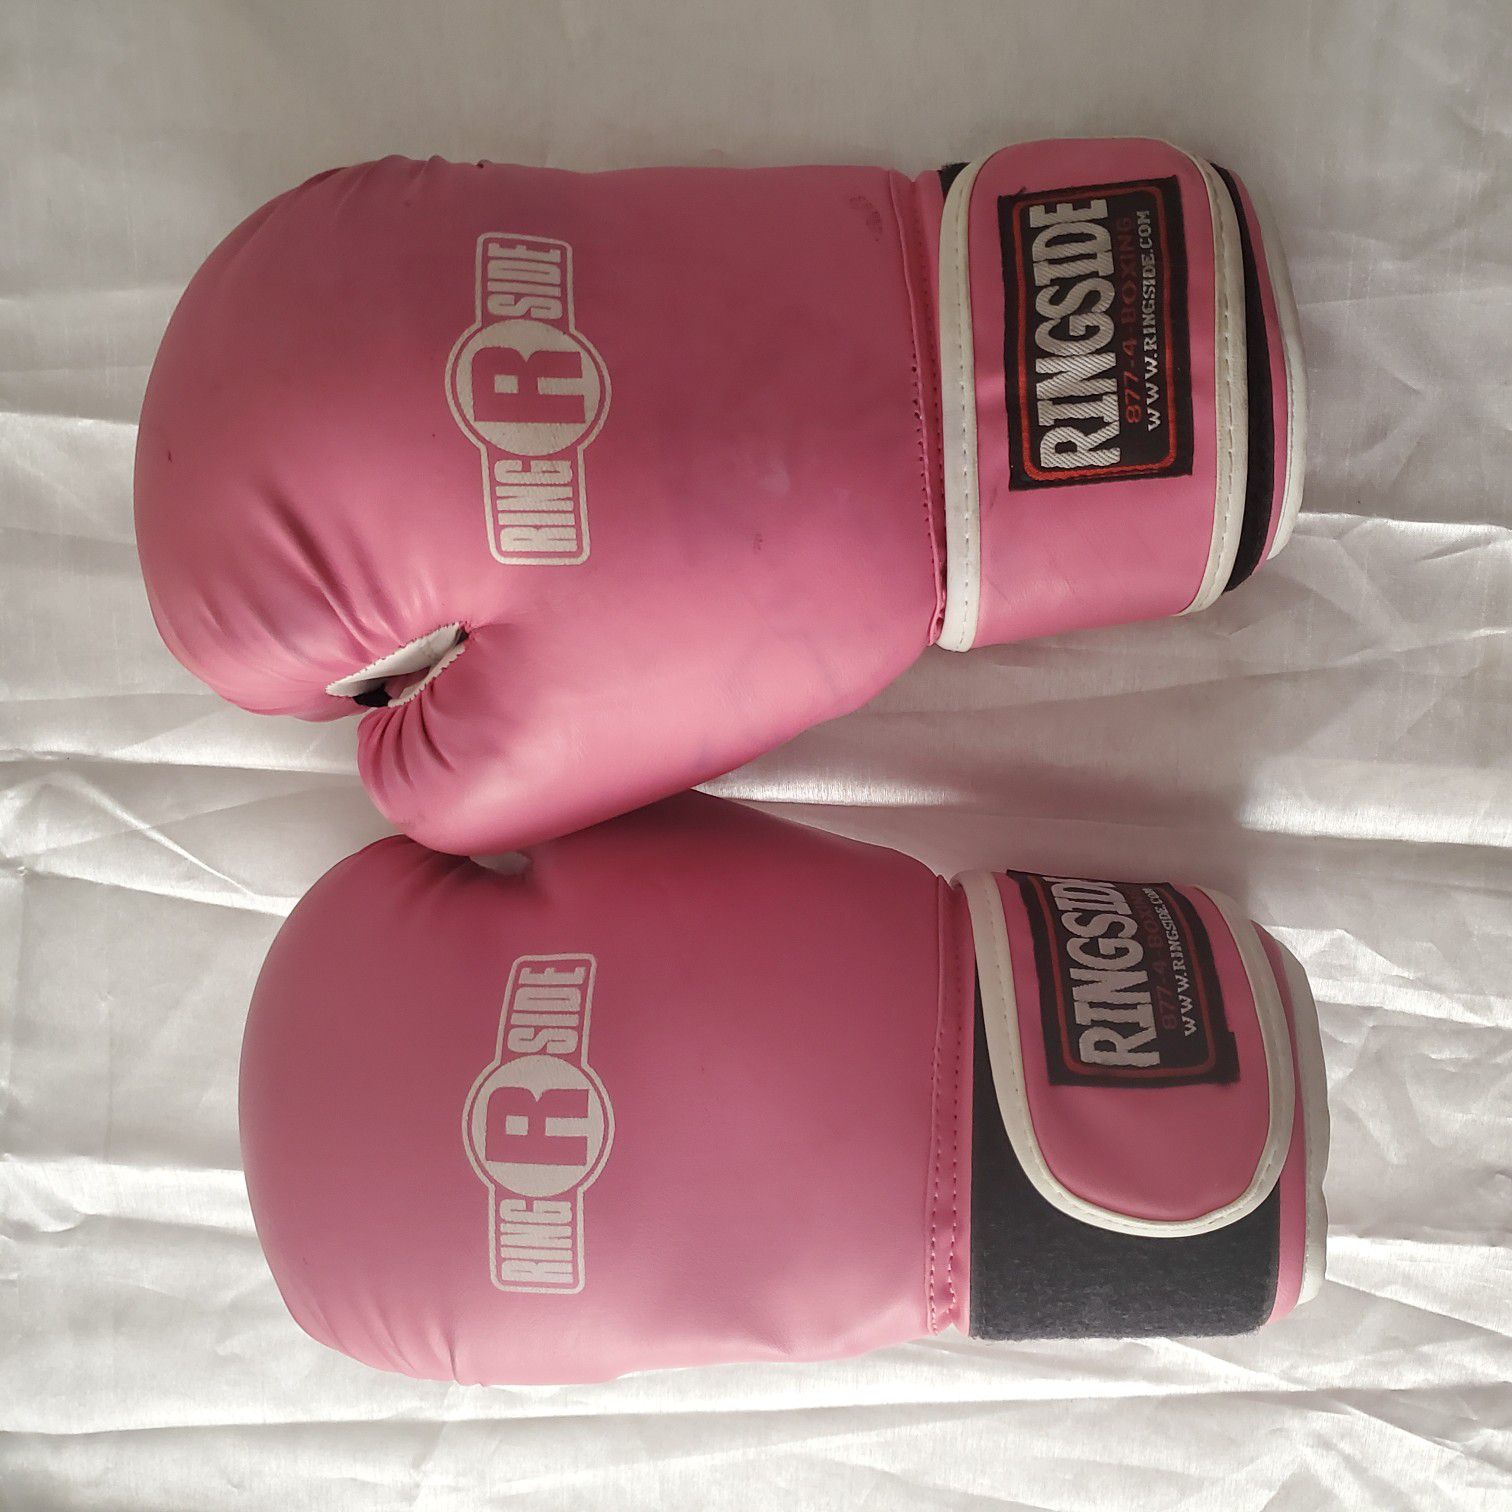 2 sets of boxing gloves